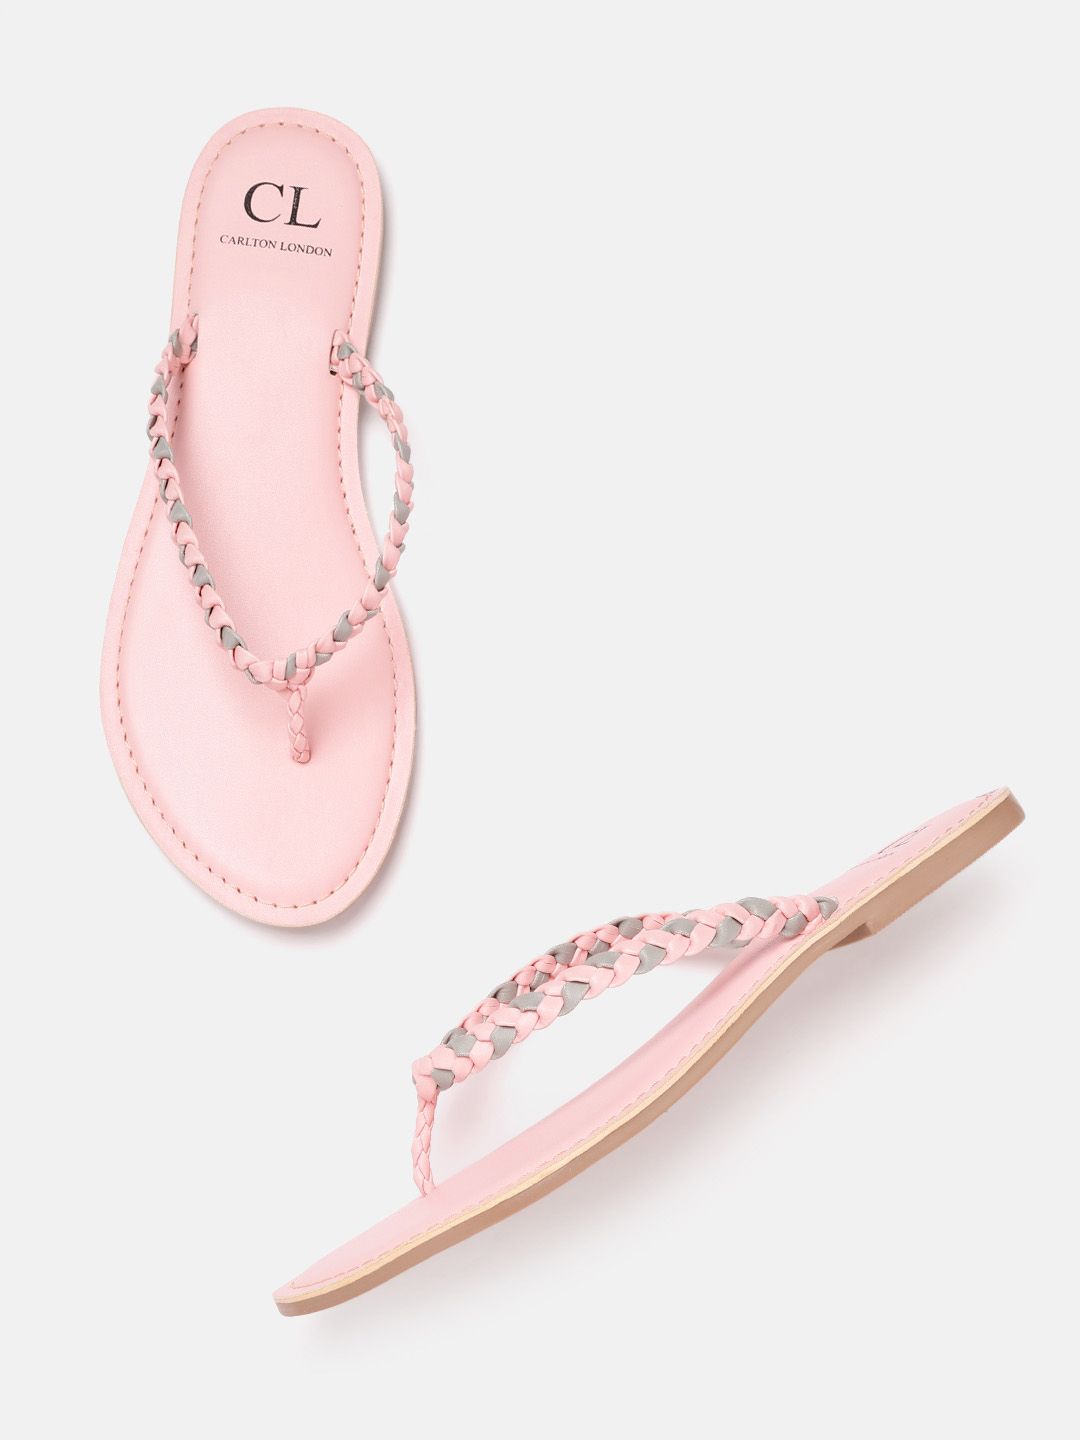 Carlton London Women Pink & Grey Braided Open Toe Flats Price in India